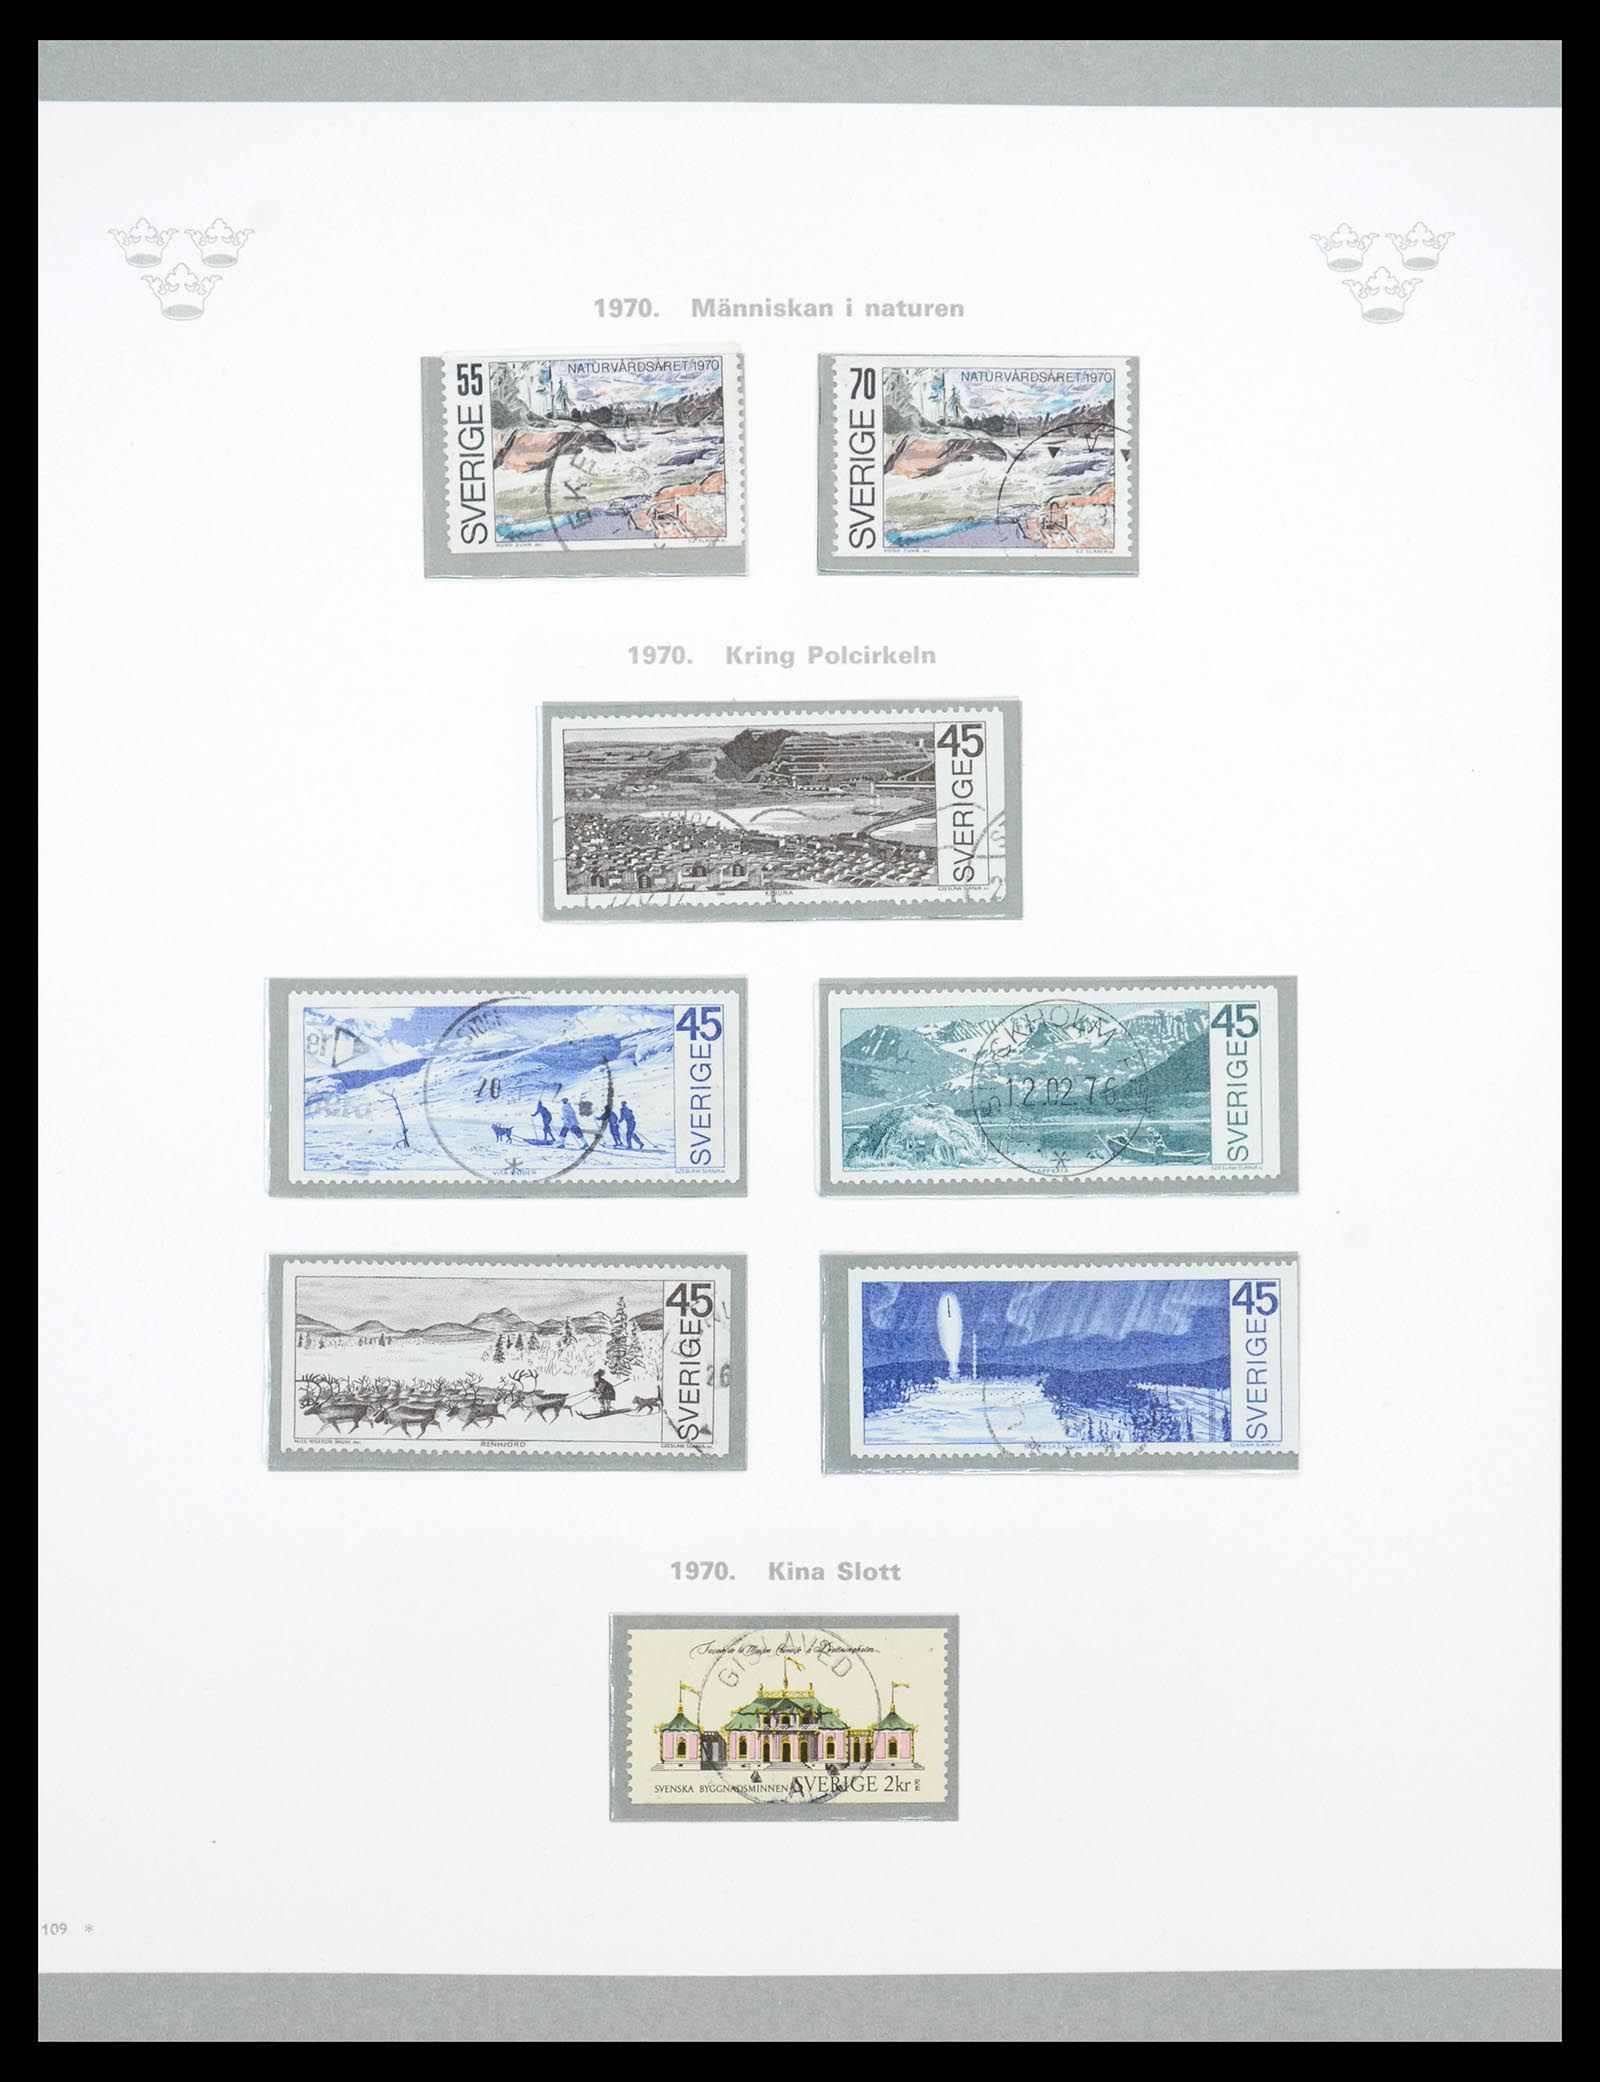 36579 078 - Stamp collection 36579 Zweden complete verzameling 1855-1975.